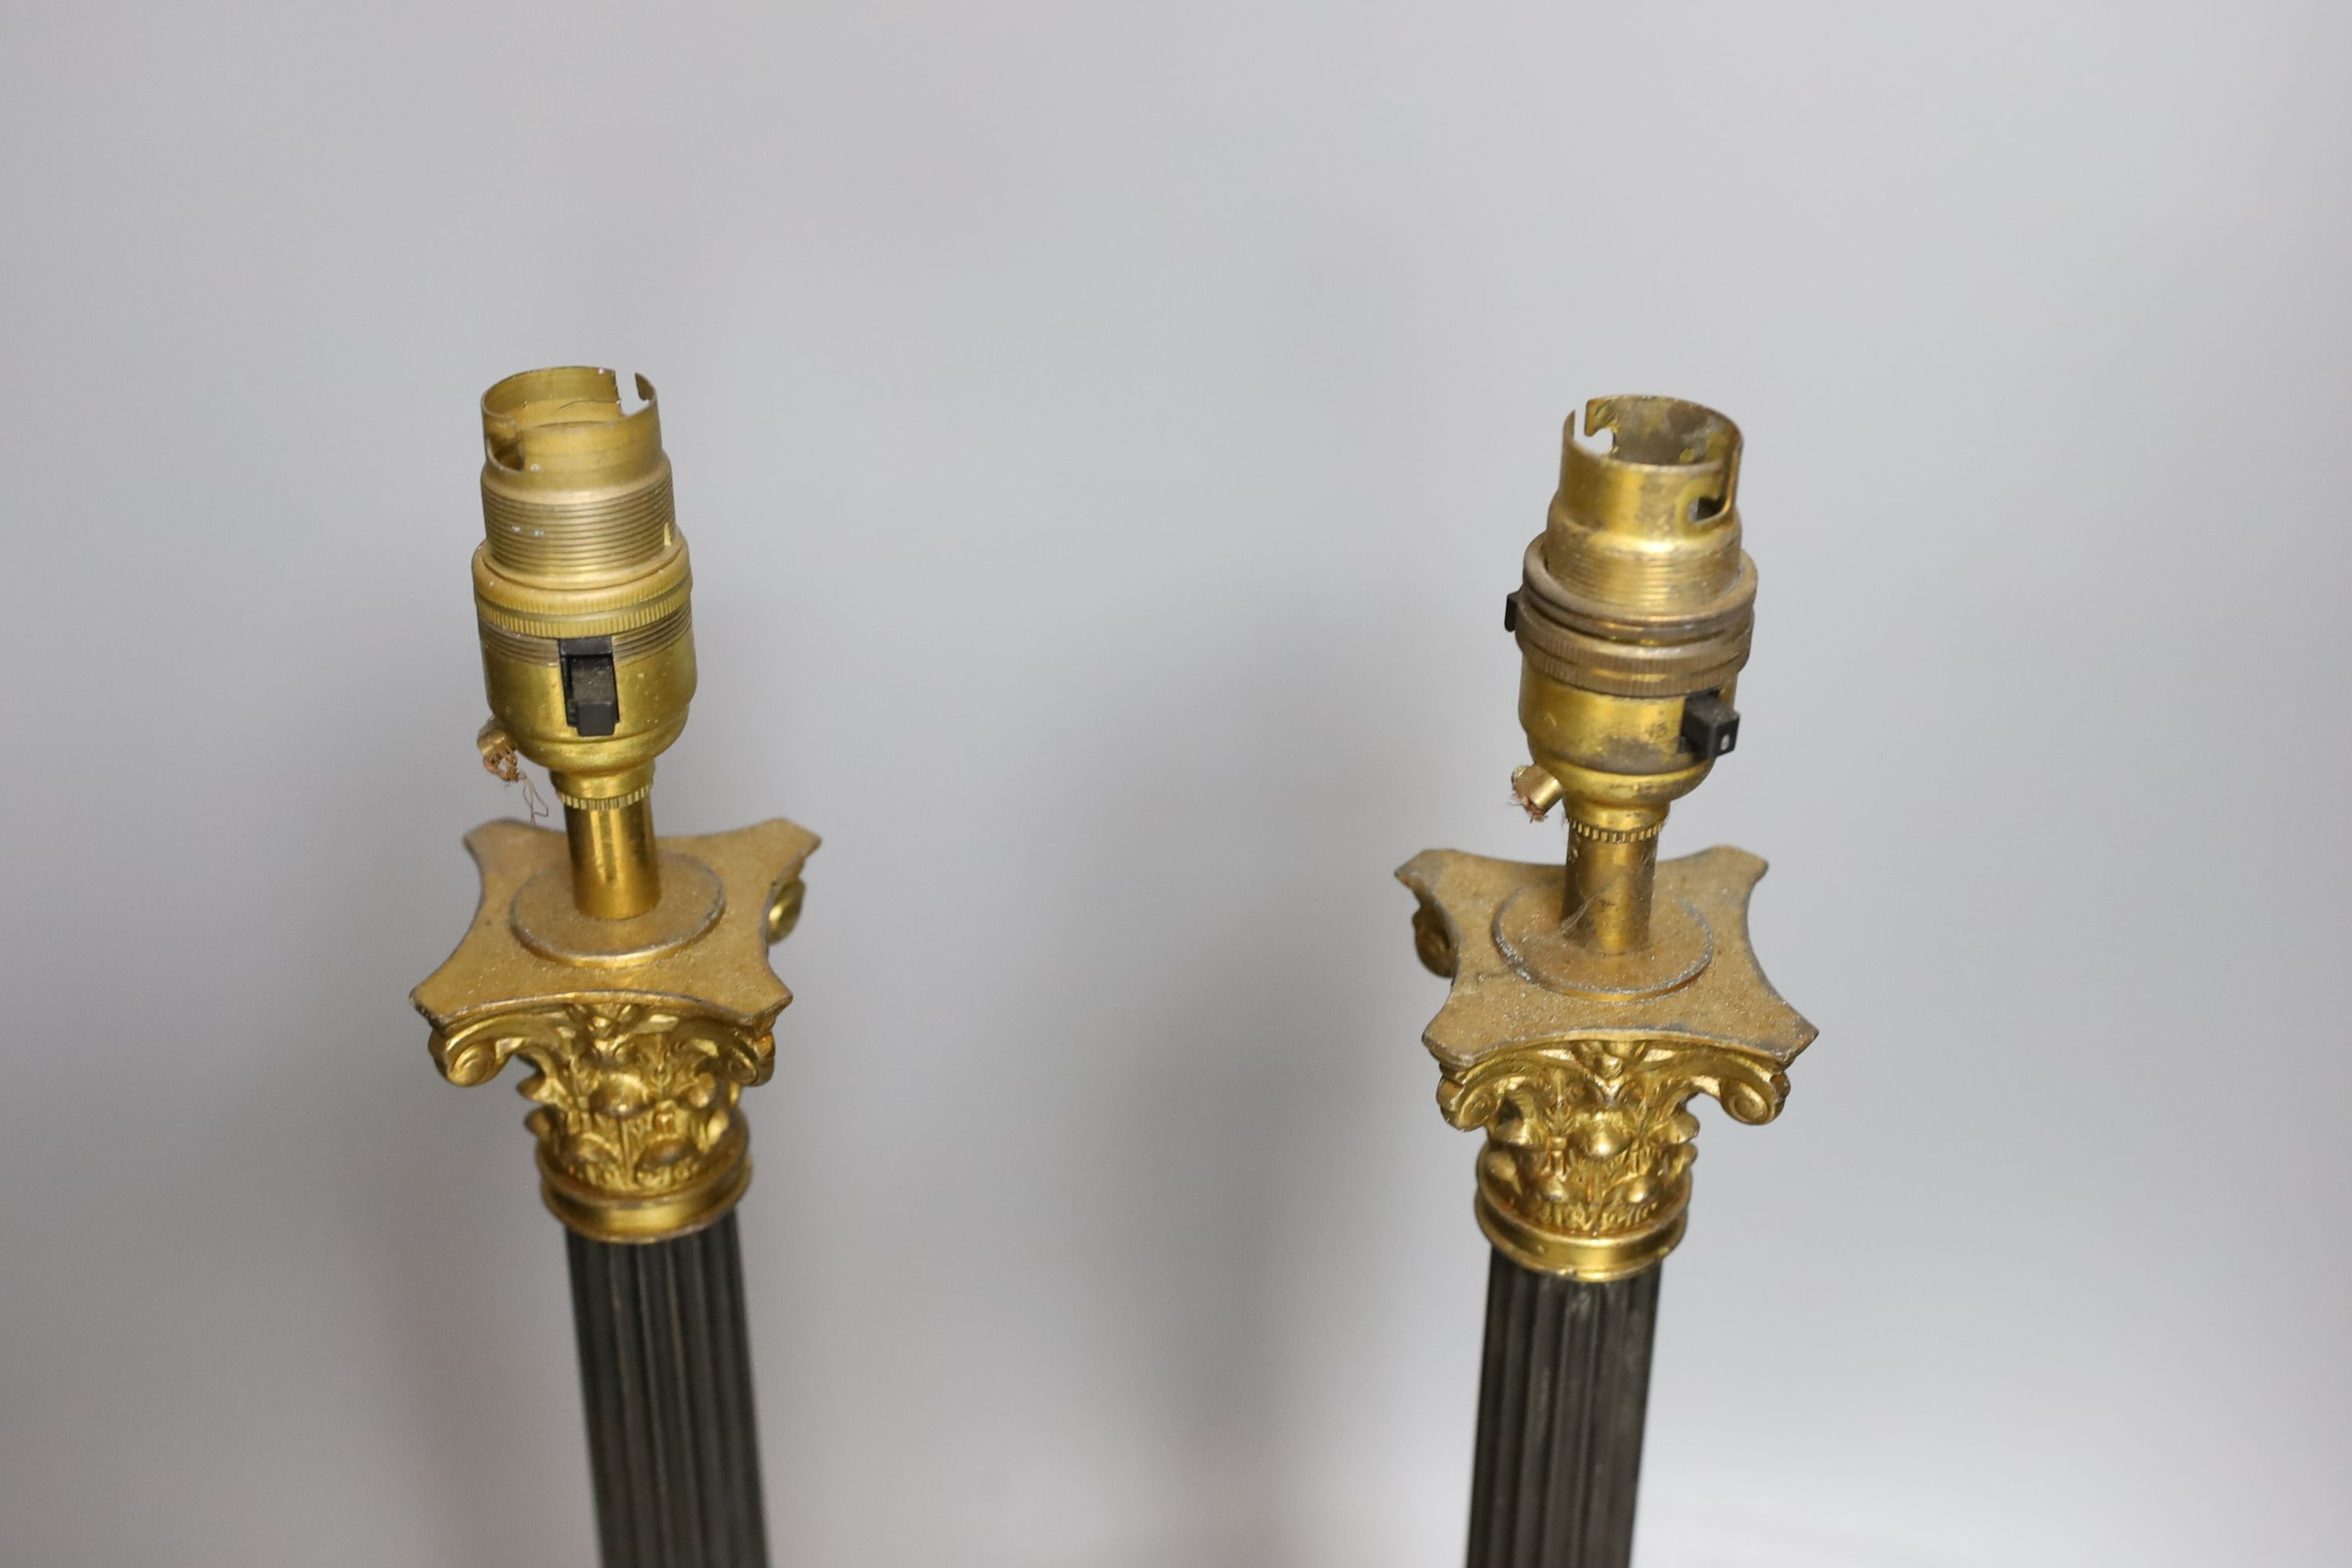 A pair of Corinthian column table lamps - 43cm tall